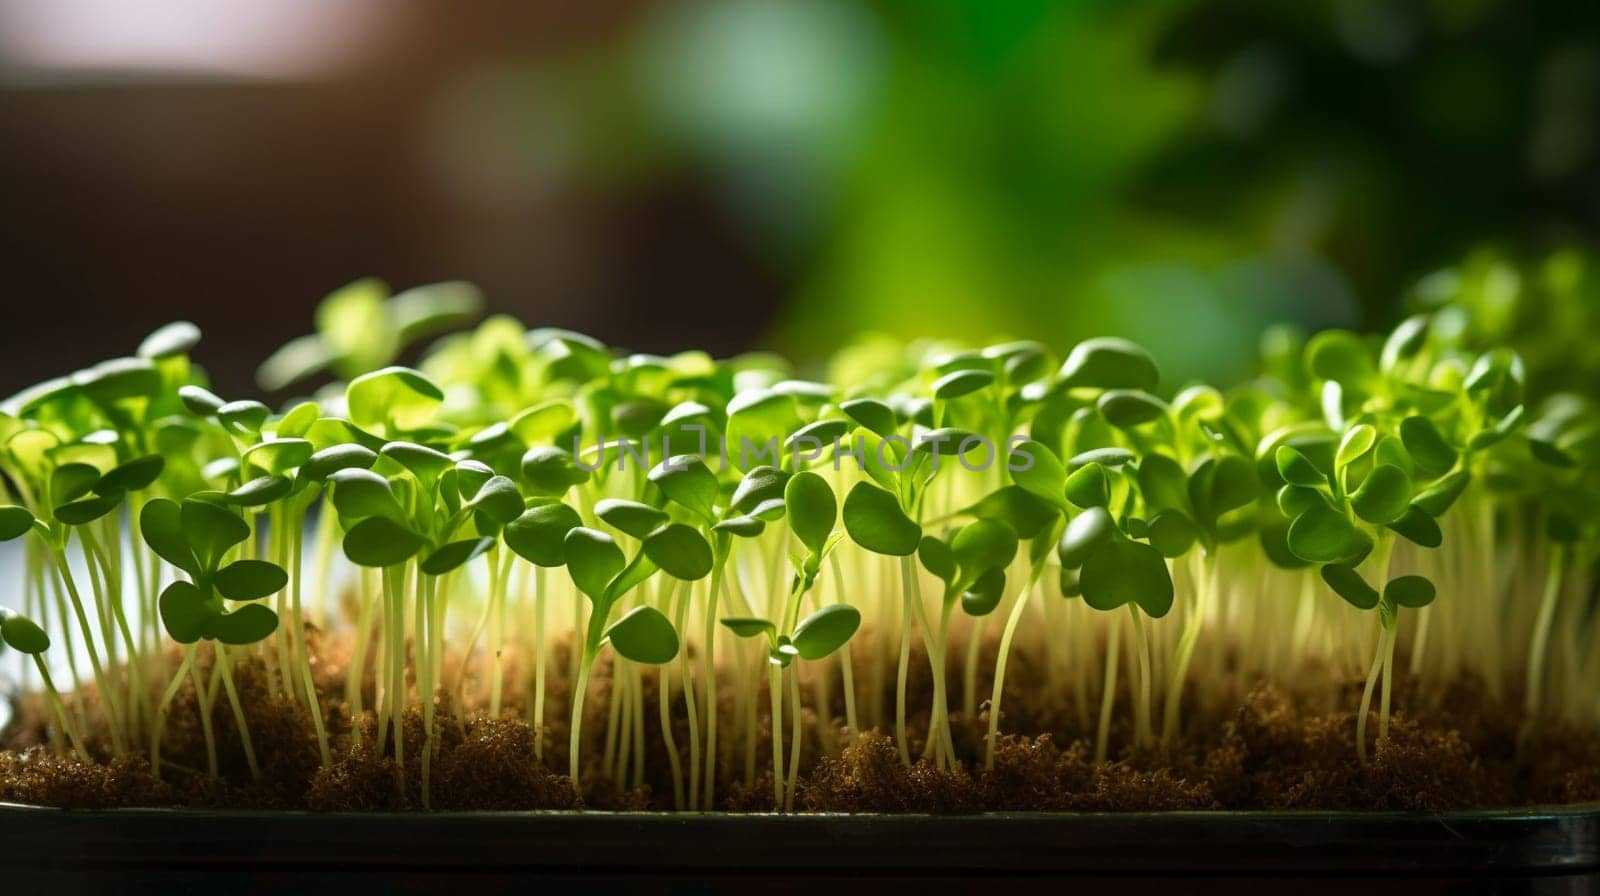 Young green sprouts grow in sunlit soil. by kizuneko